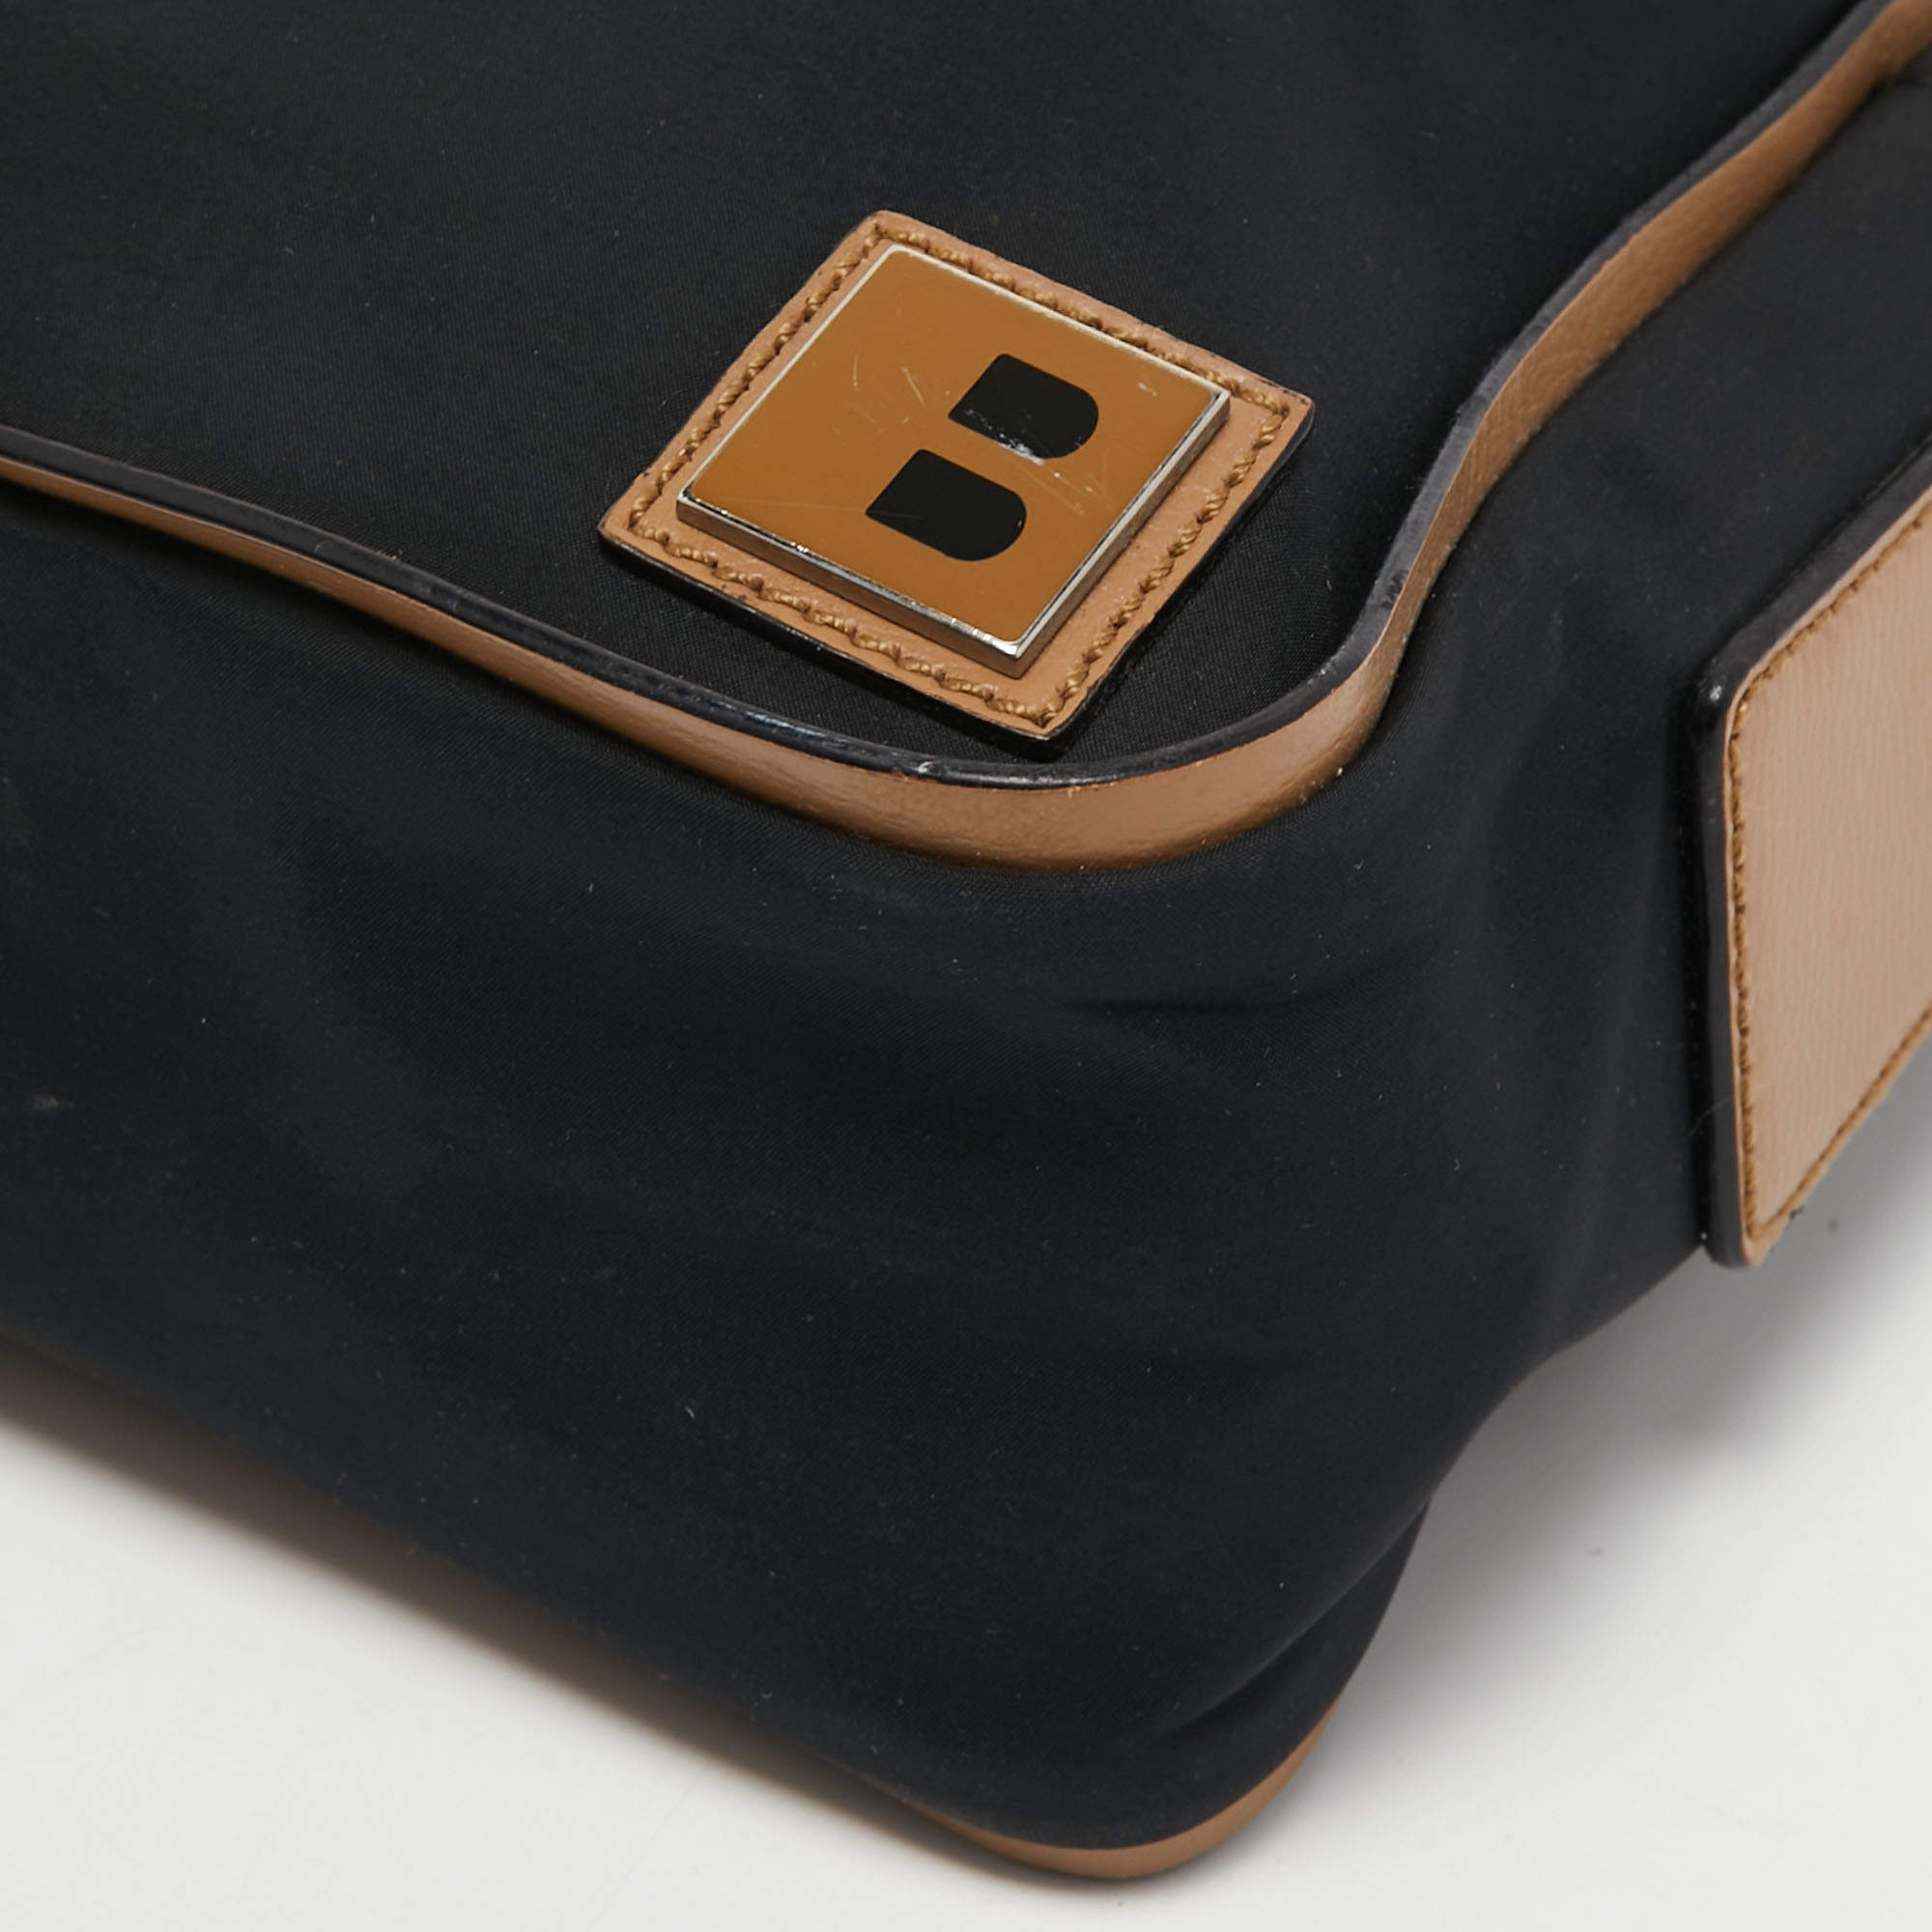 Bally Nylon Double-Pouch Shoulder Bag - ShopStyle